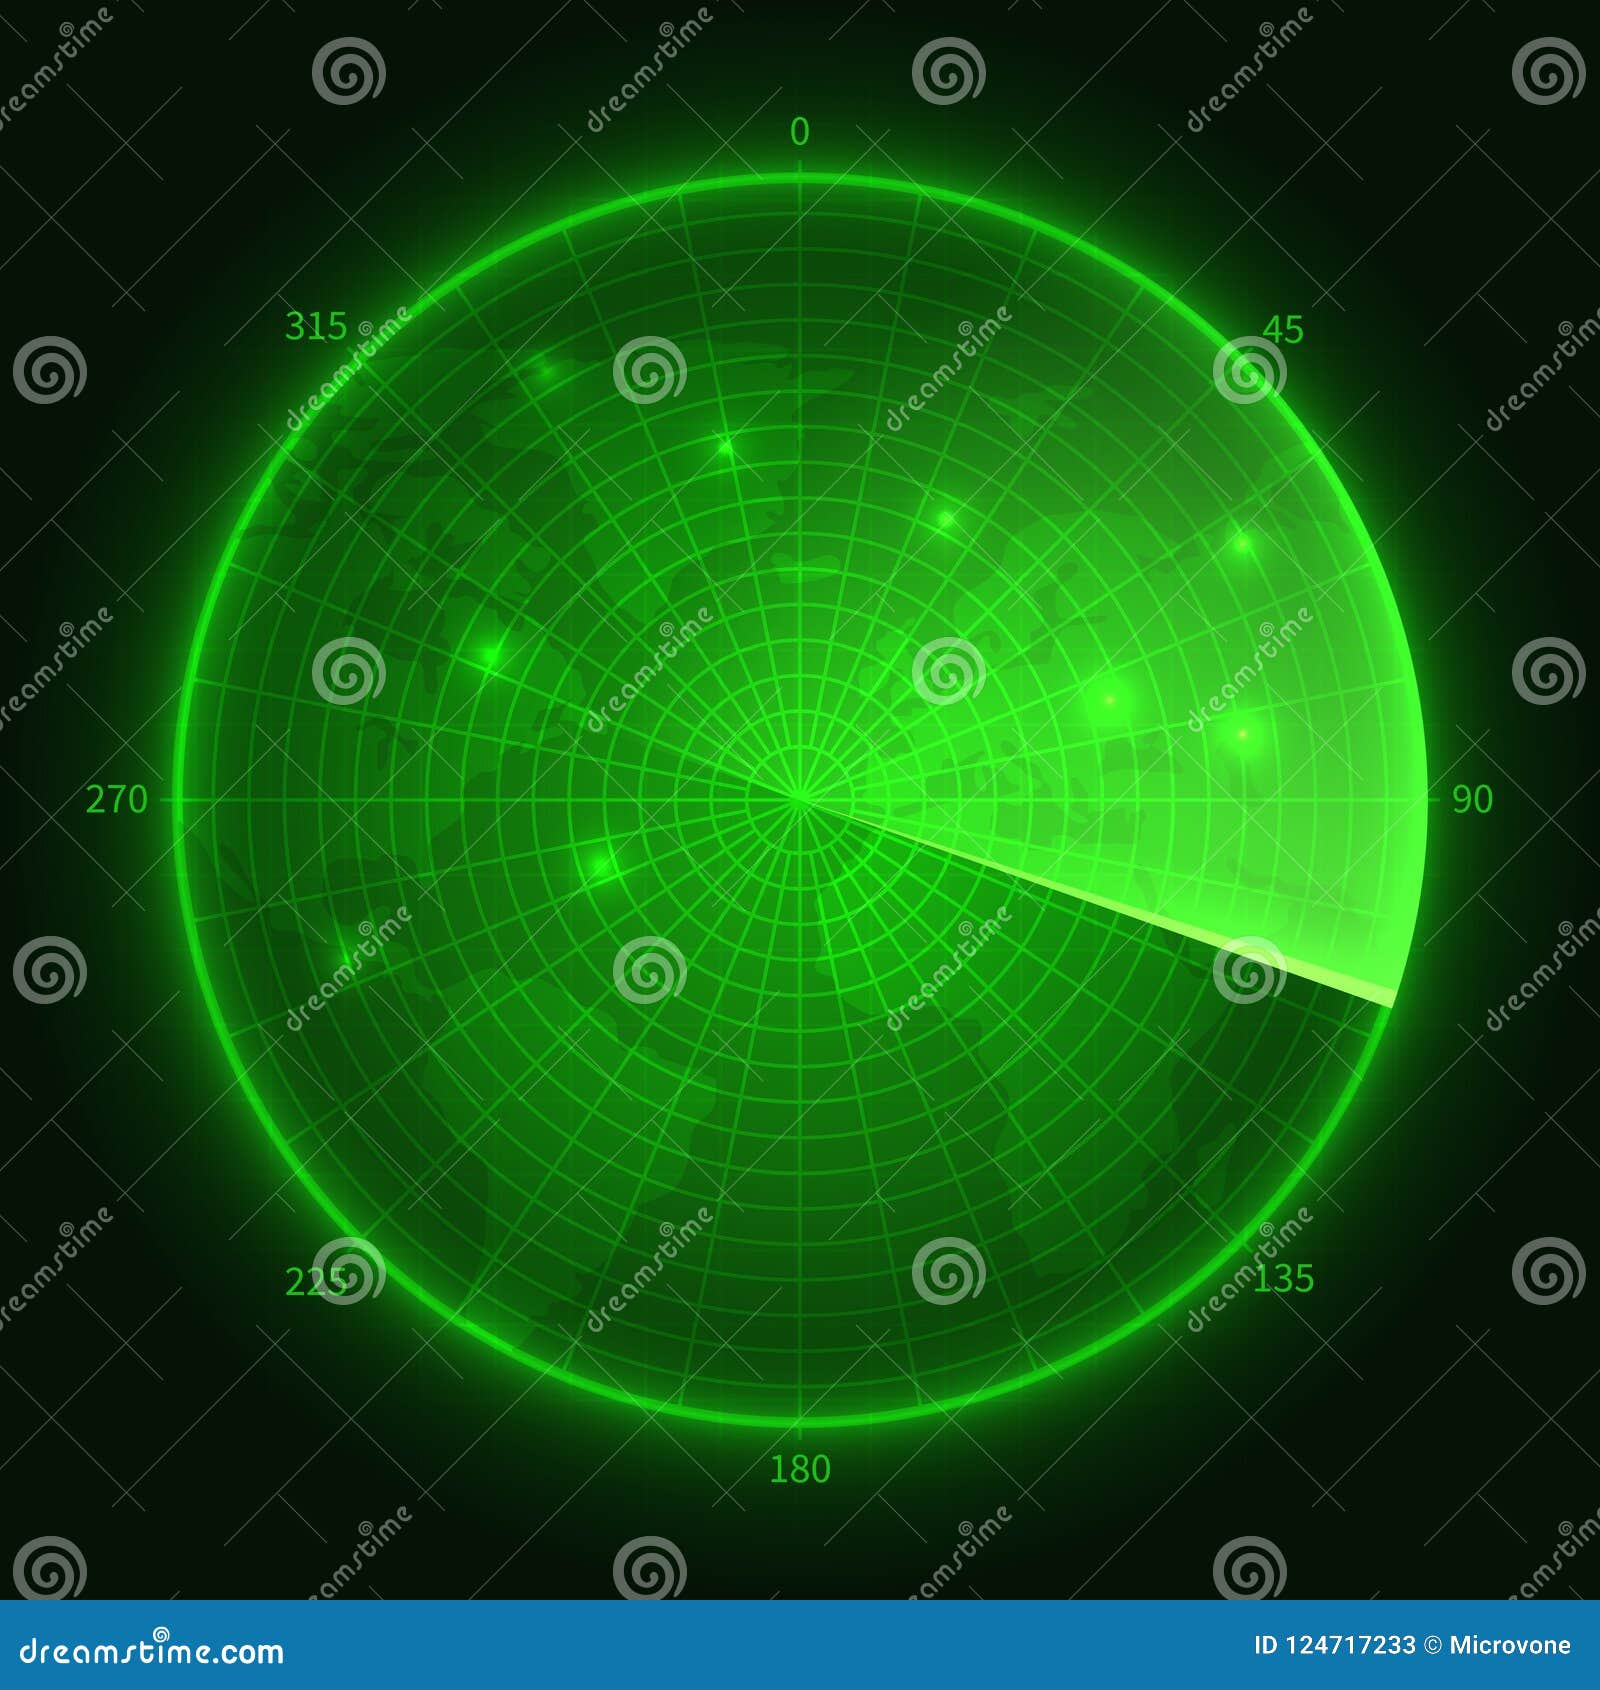 green radar. navy submarine sonar with aims. navigation screen  